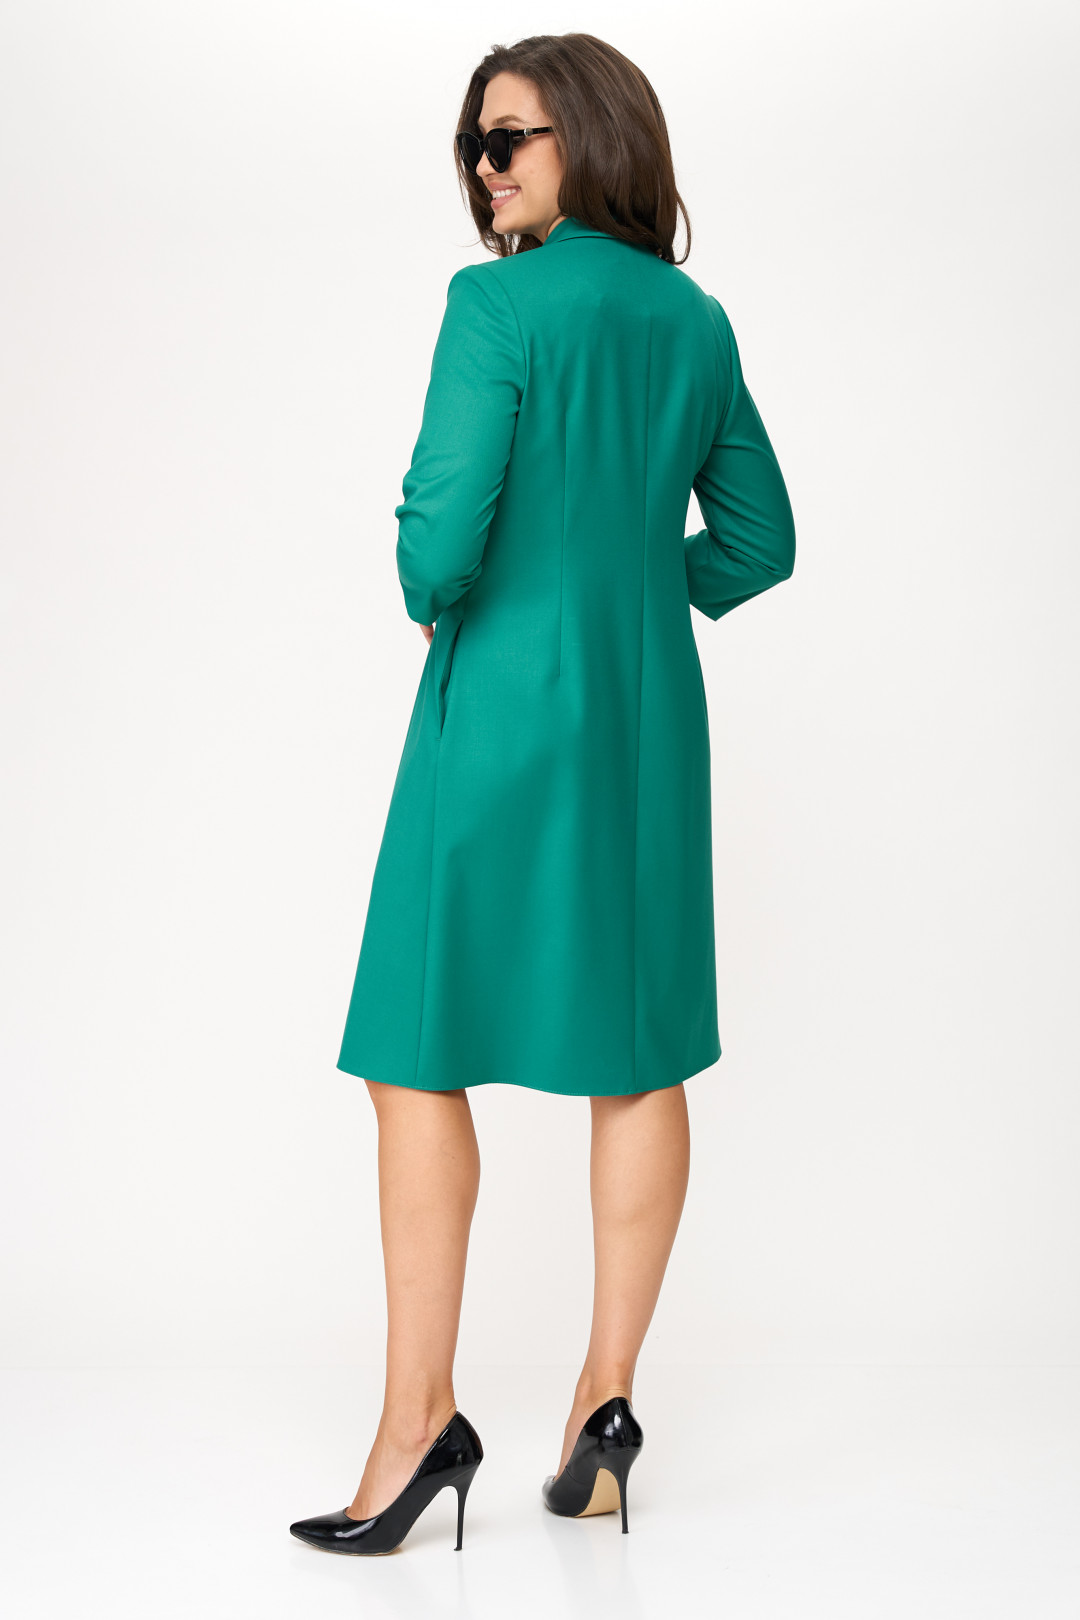 Платье Карина Делюкс М-1154 зелёный